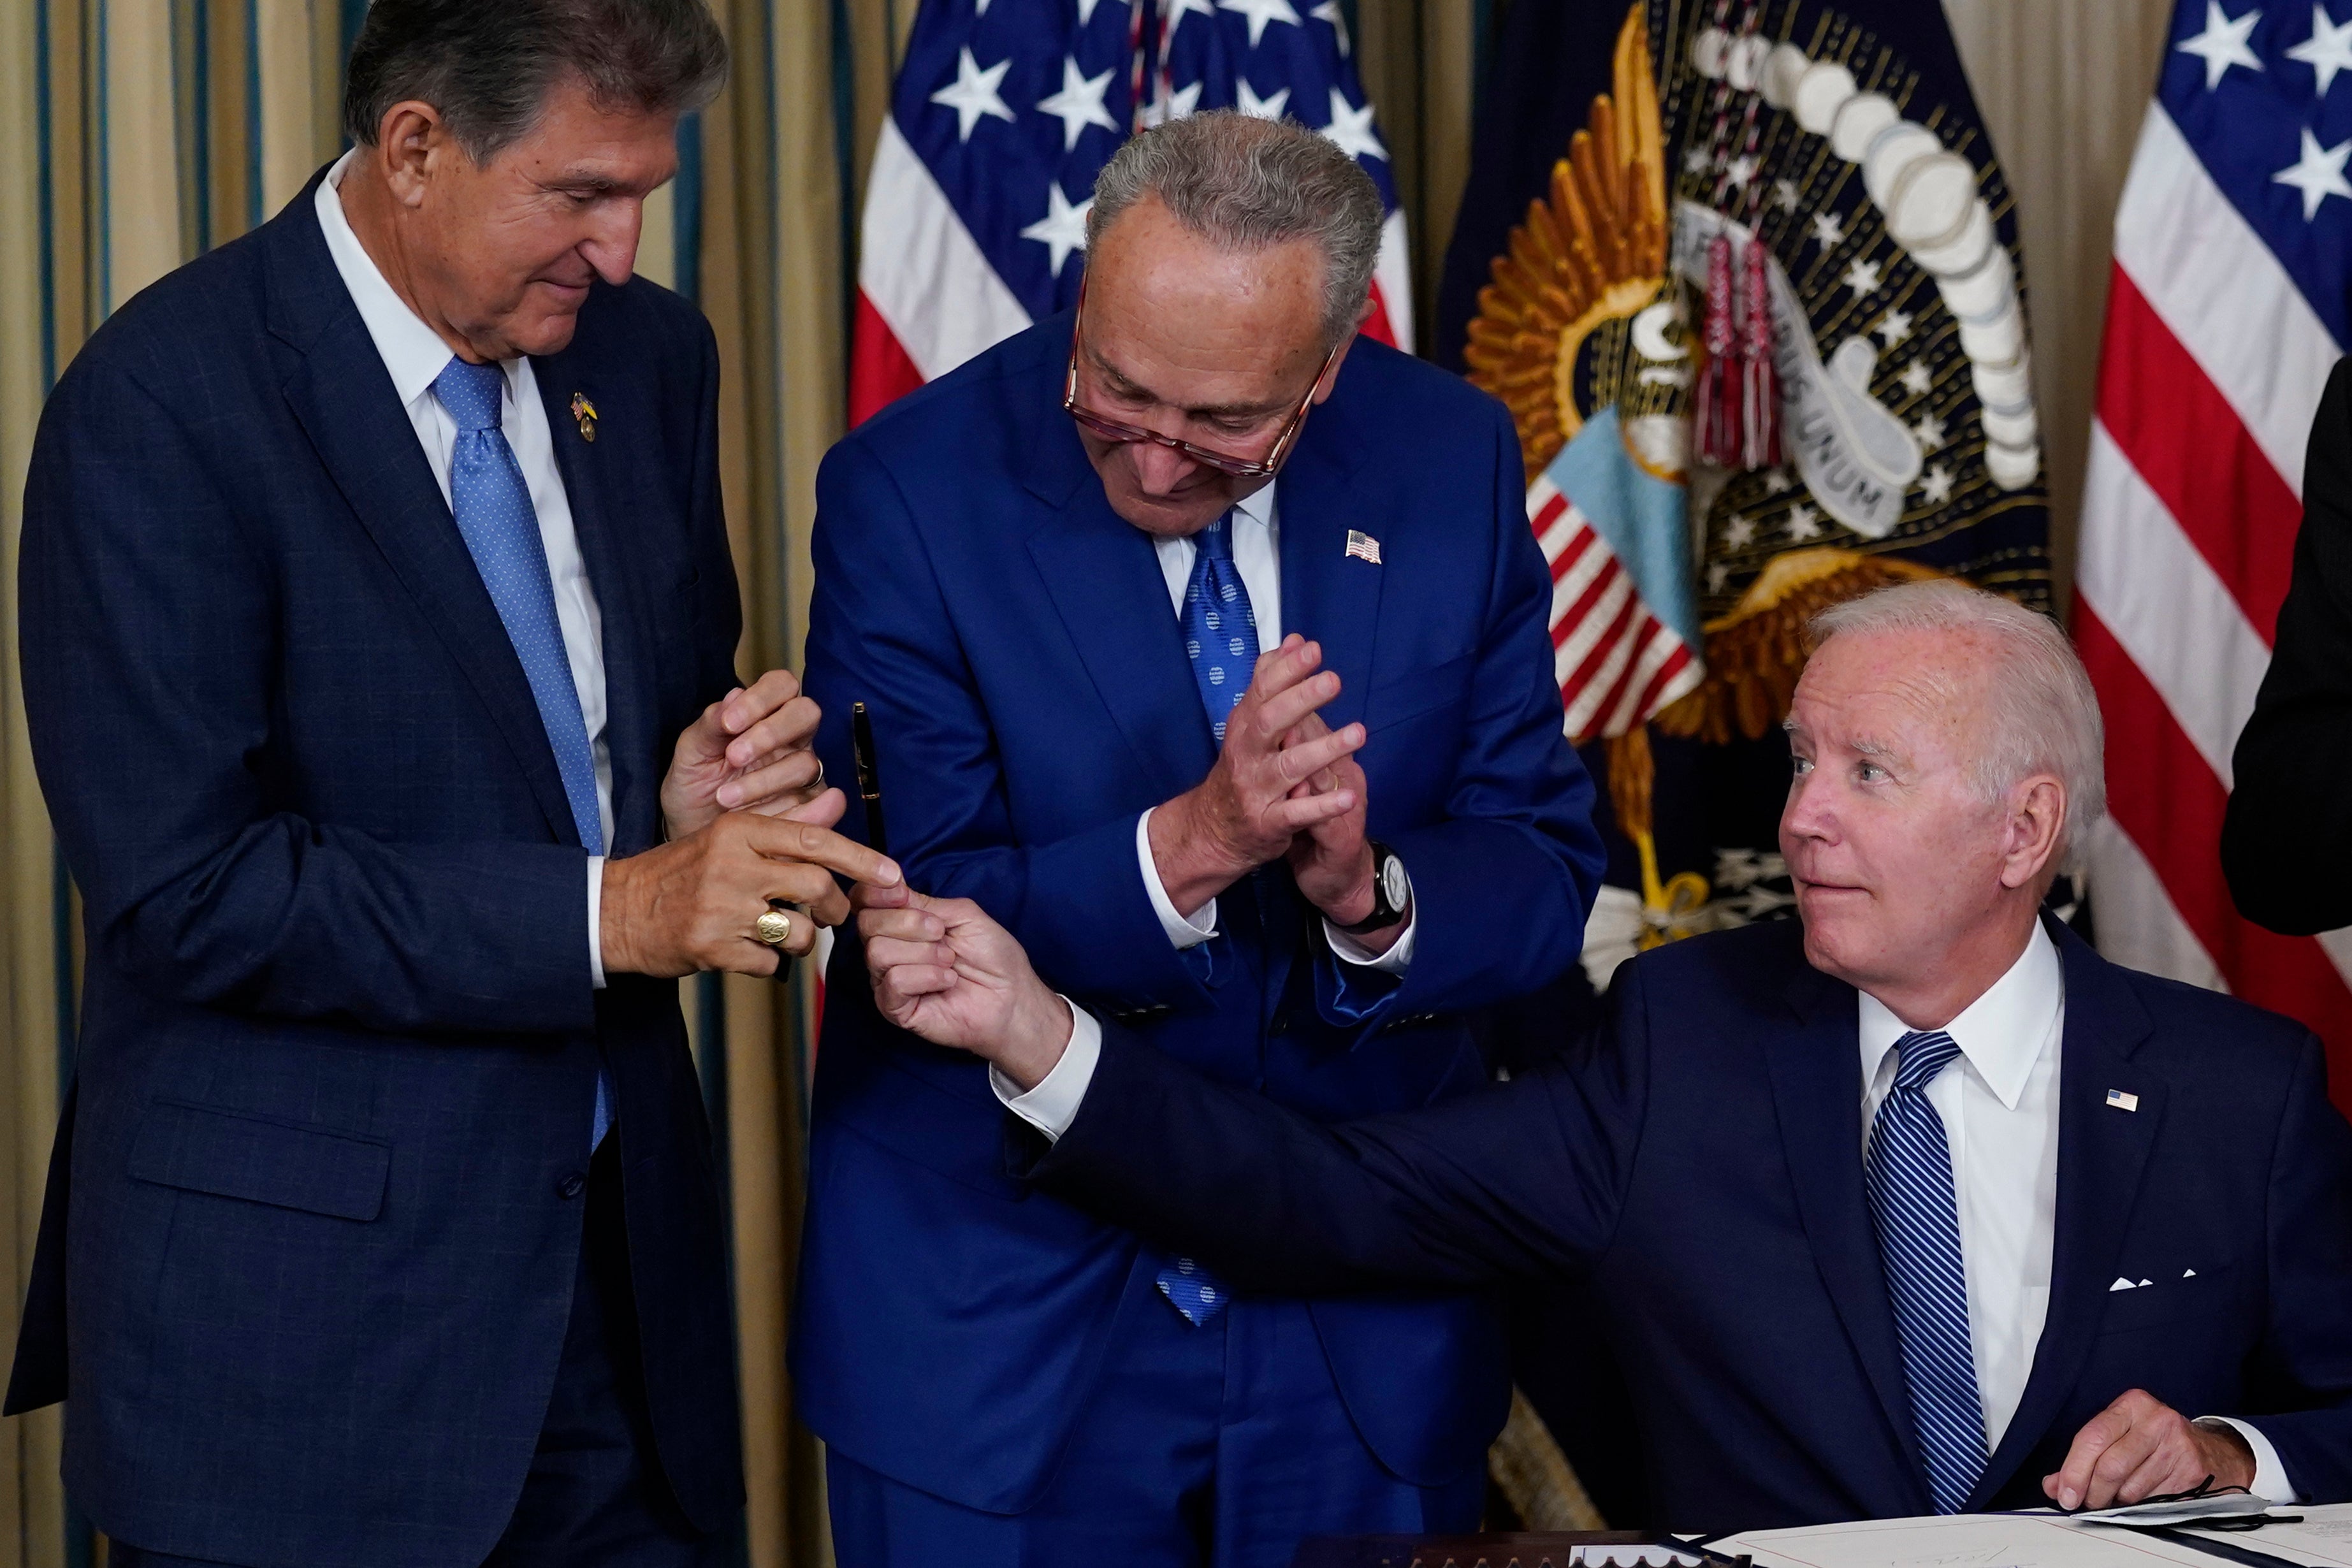 President Joe Biden hands the pen he used to sign the Democrats' landmark climate change and health care bill to Senator Joe Manchin as Senate Majority Leader Chuck Schumer looks on